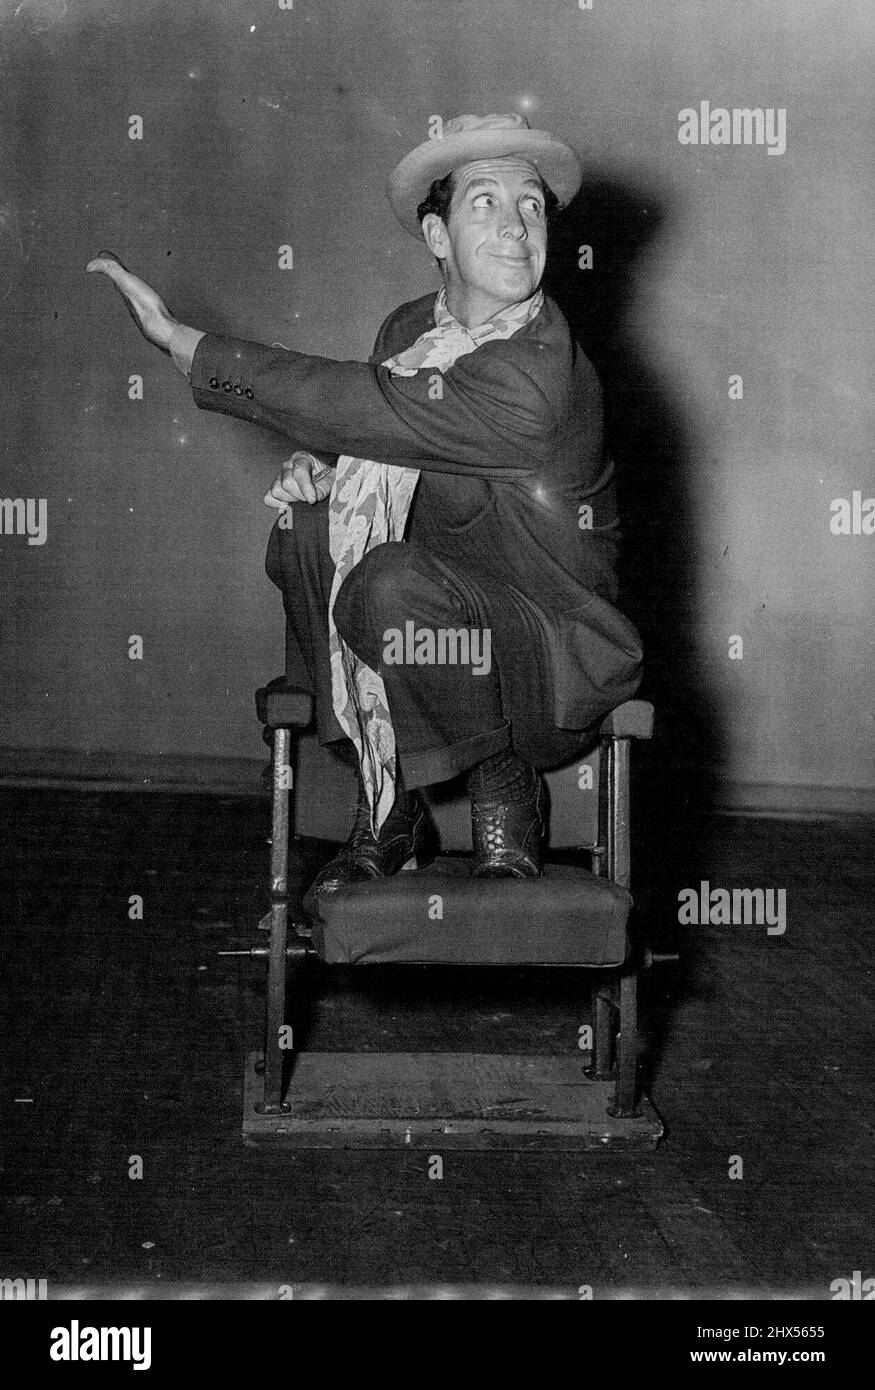 A Comedian's Satire On Jitterbug -- Attendant complaints, Jitterbug pugnacious. December 23, 1947. Stock Photo